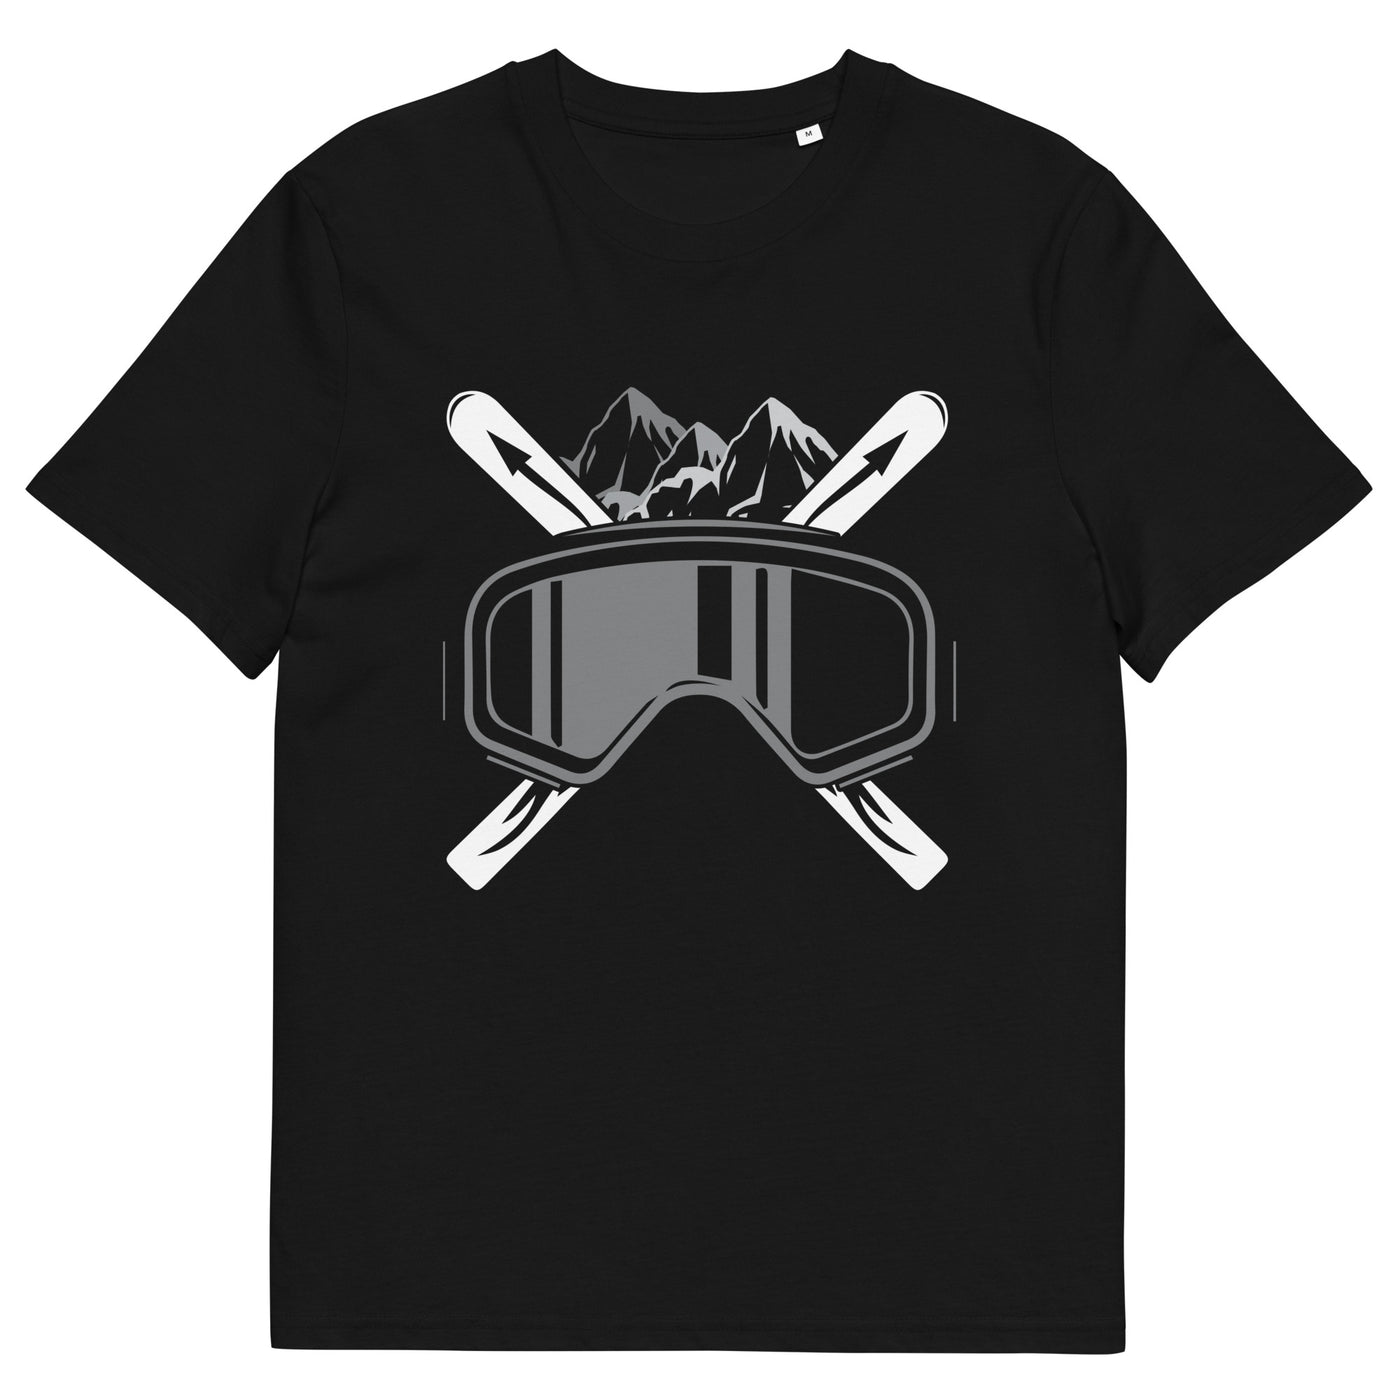 Schifoan - Herren Premium Organic T-Shirt klettern ski xxx yyy zzz Black